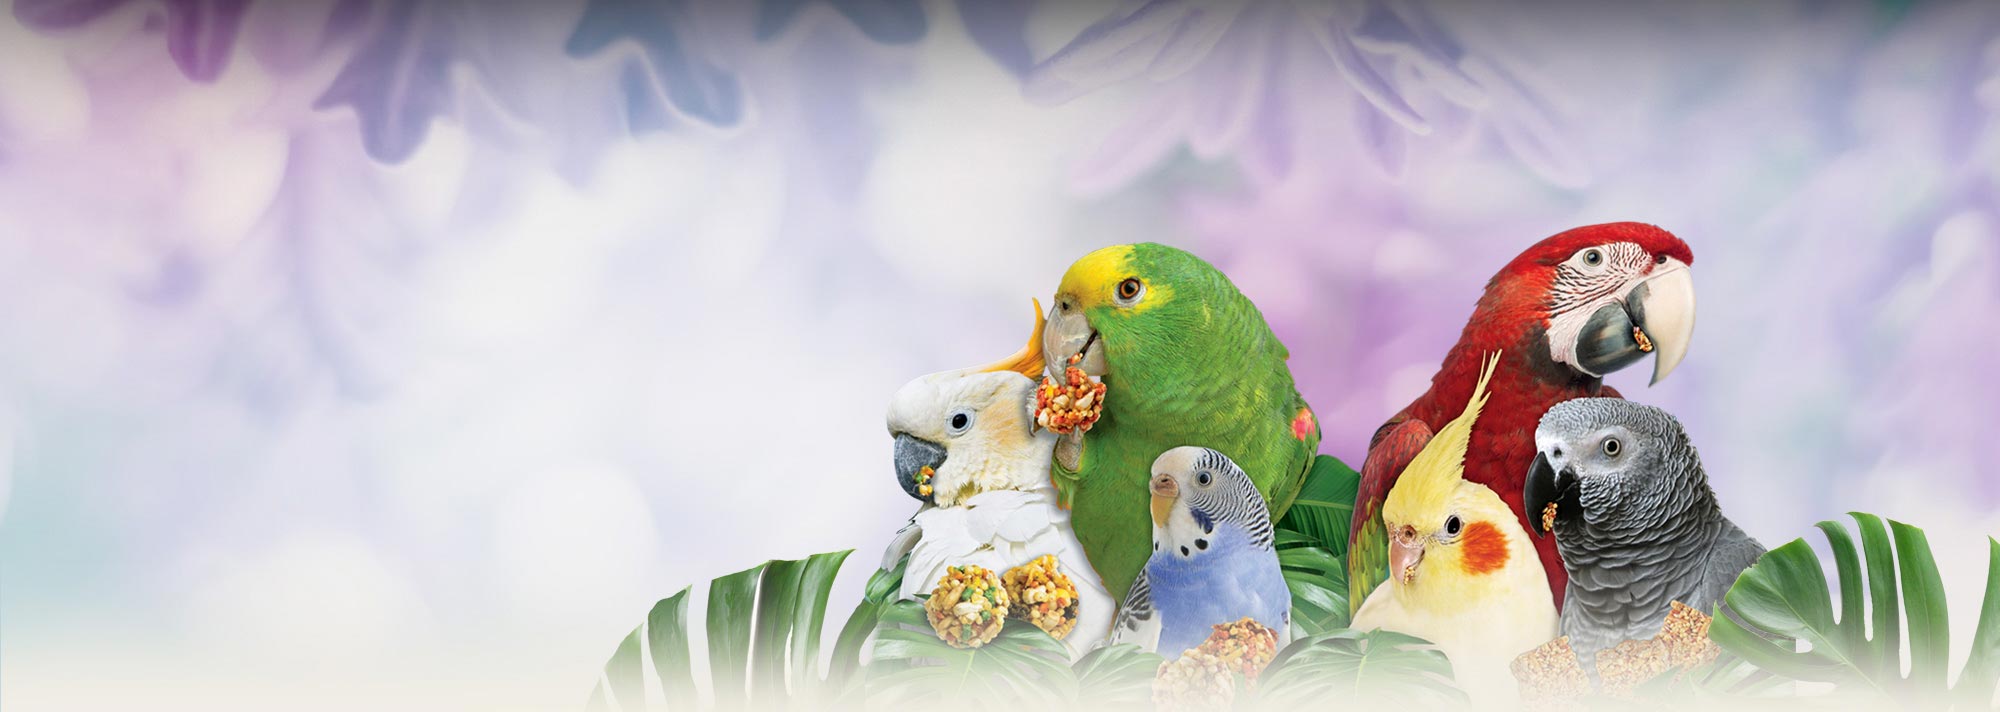 different types of pet birds